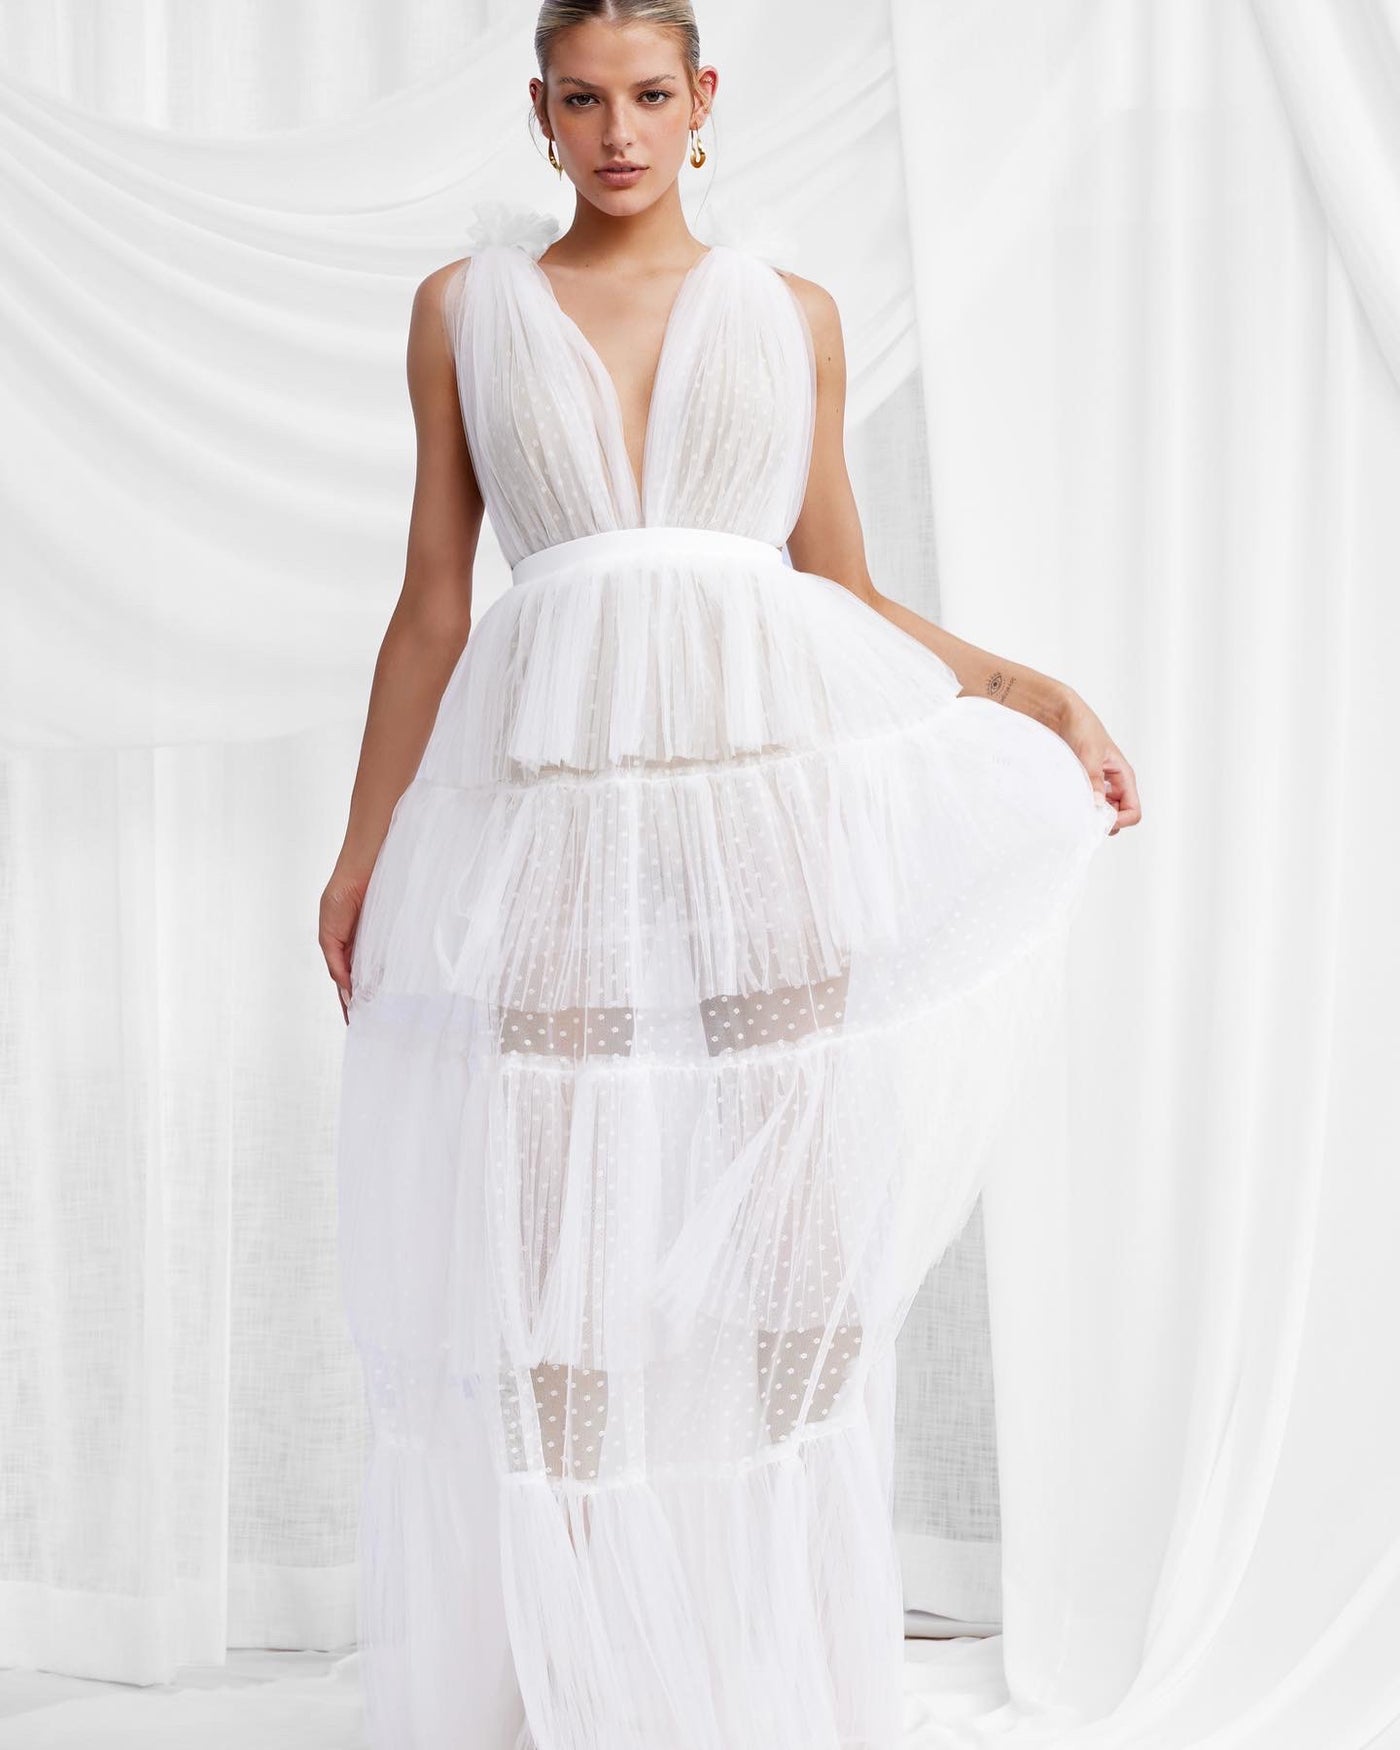 Zendaya Gown in White by Lexi - RENTAL